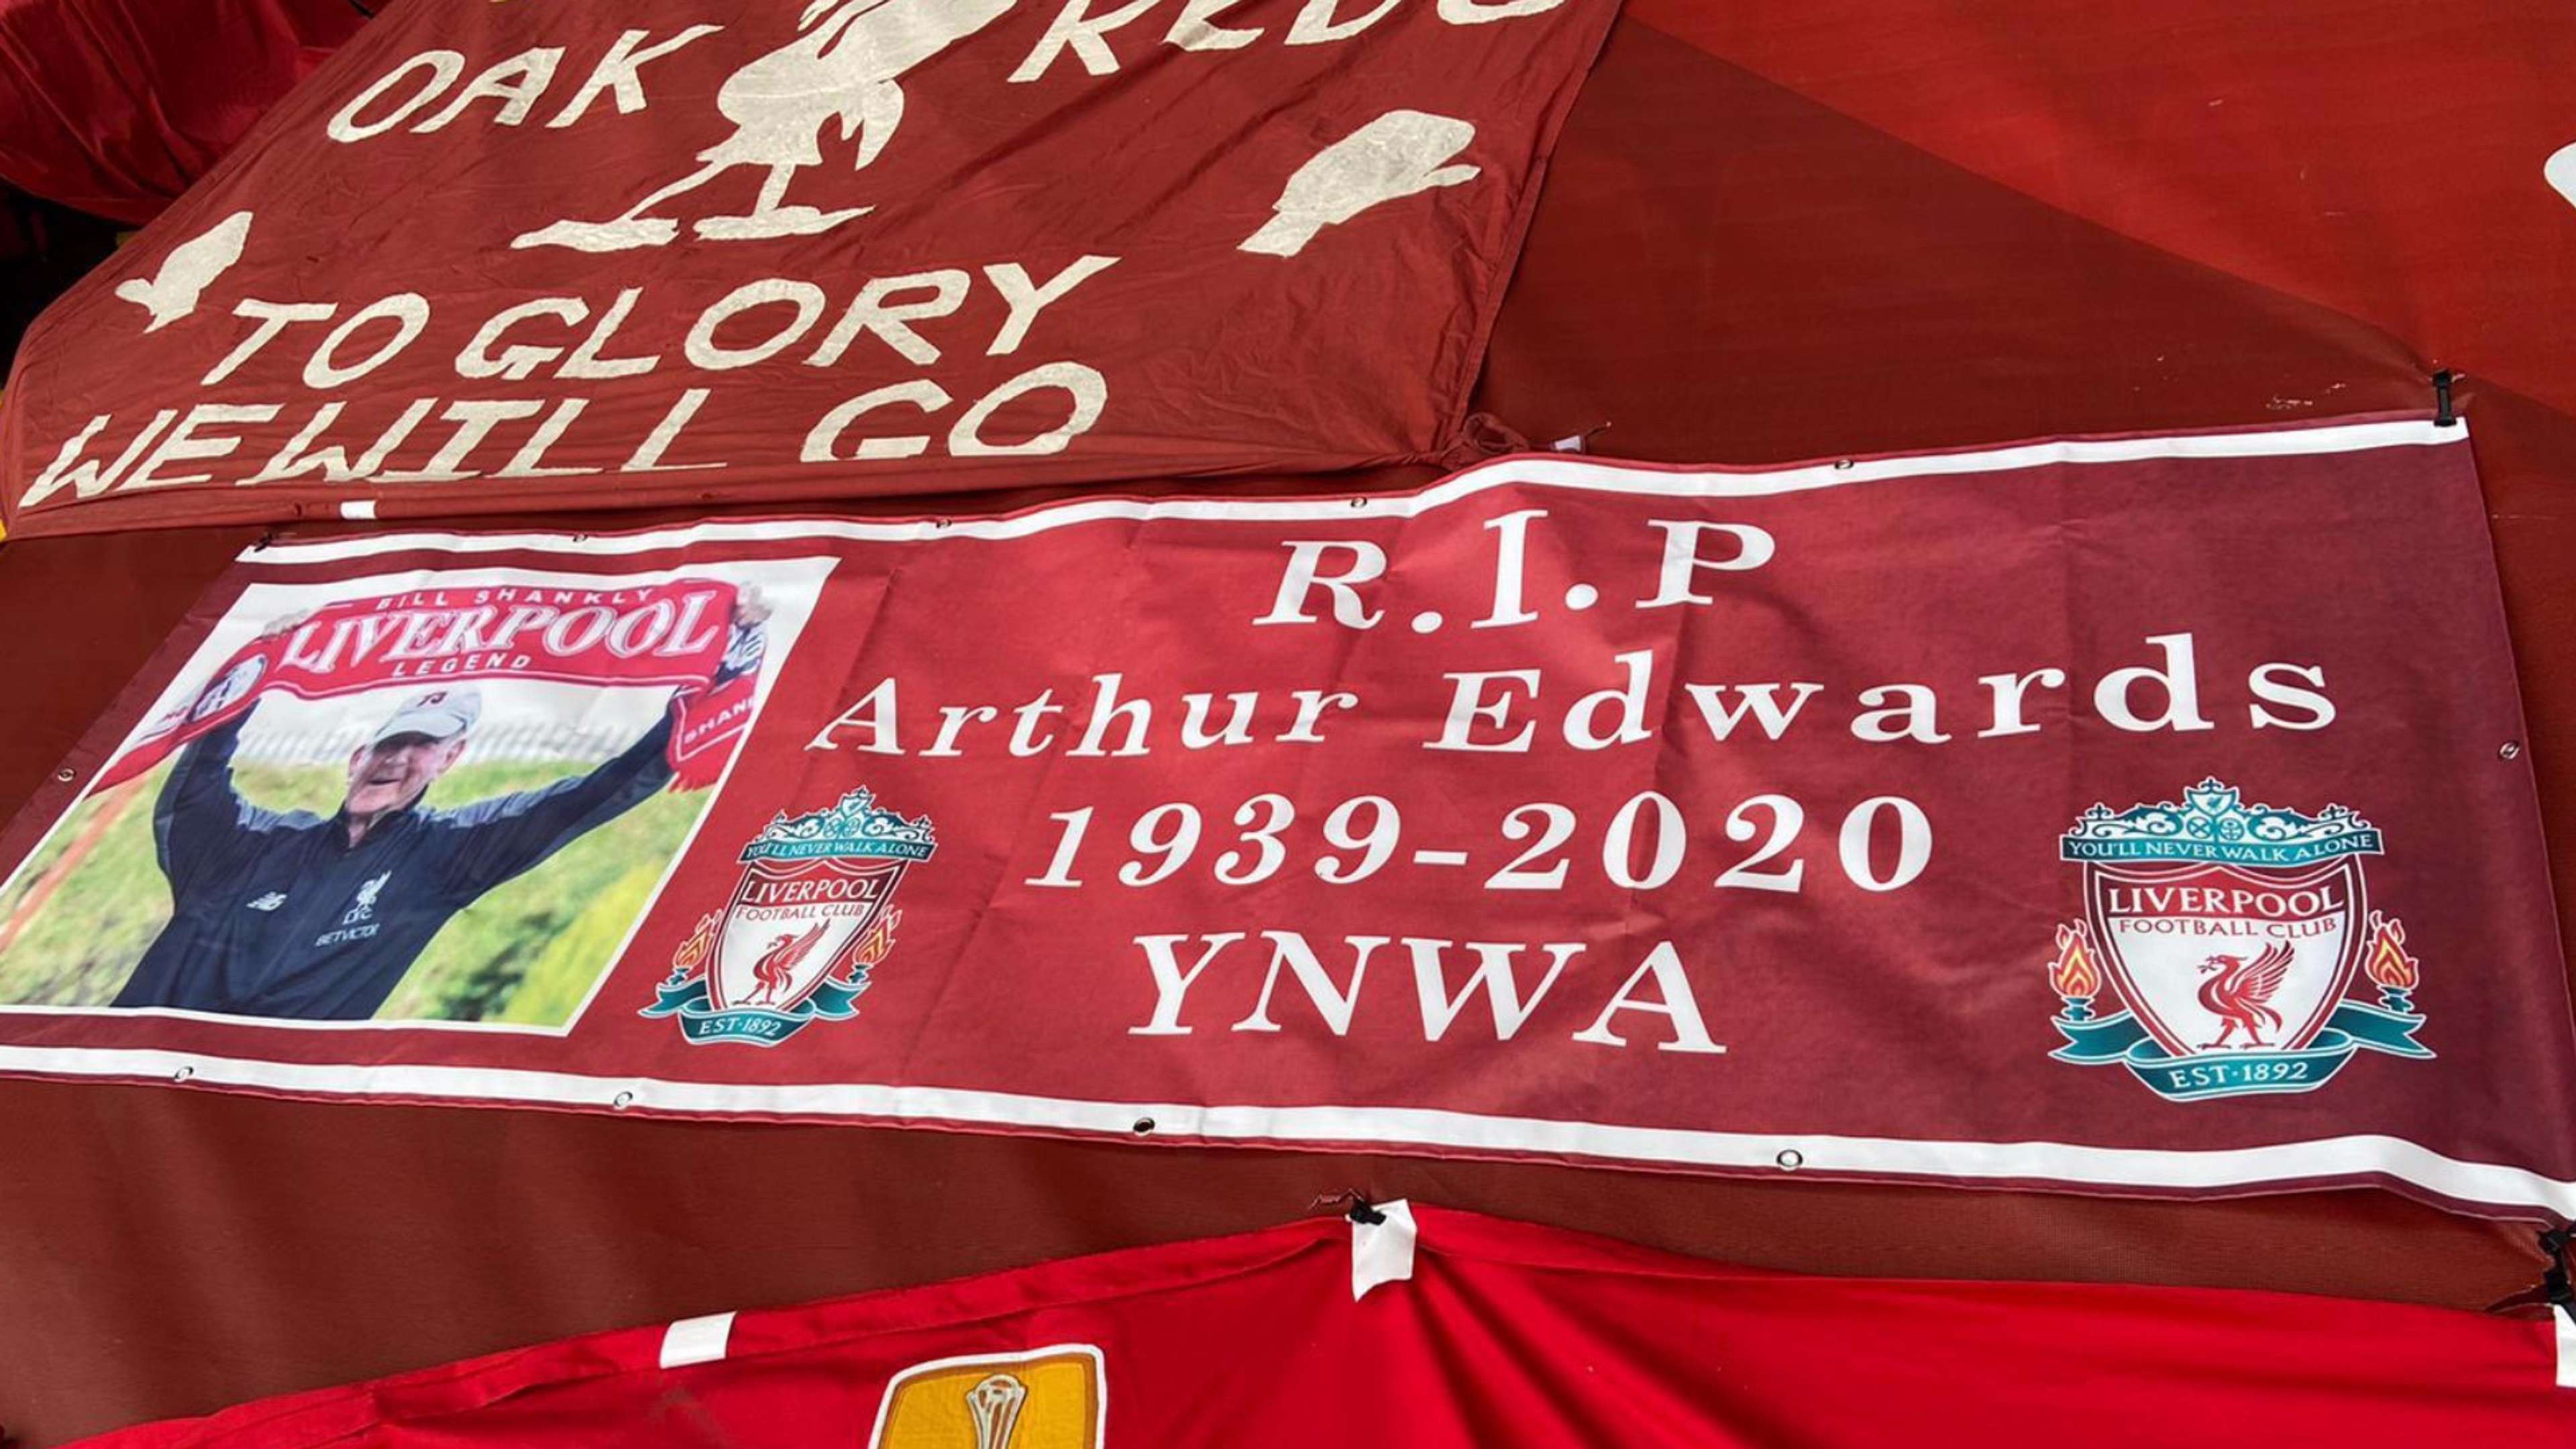 Liverpool Arthur Edwards 2020